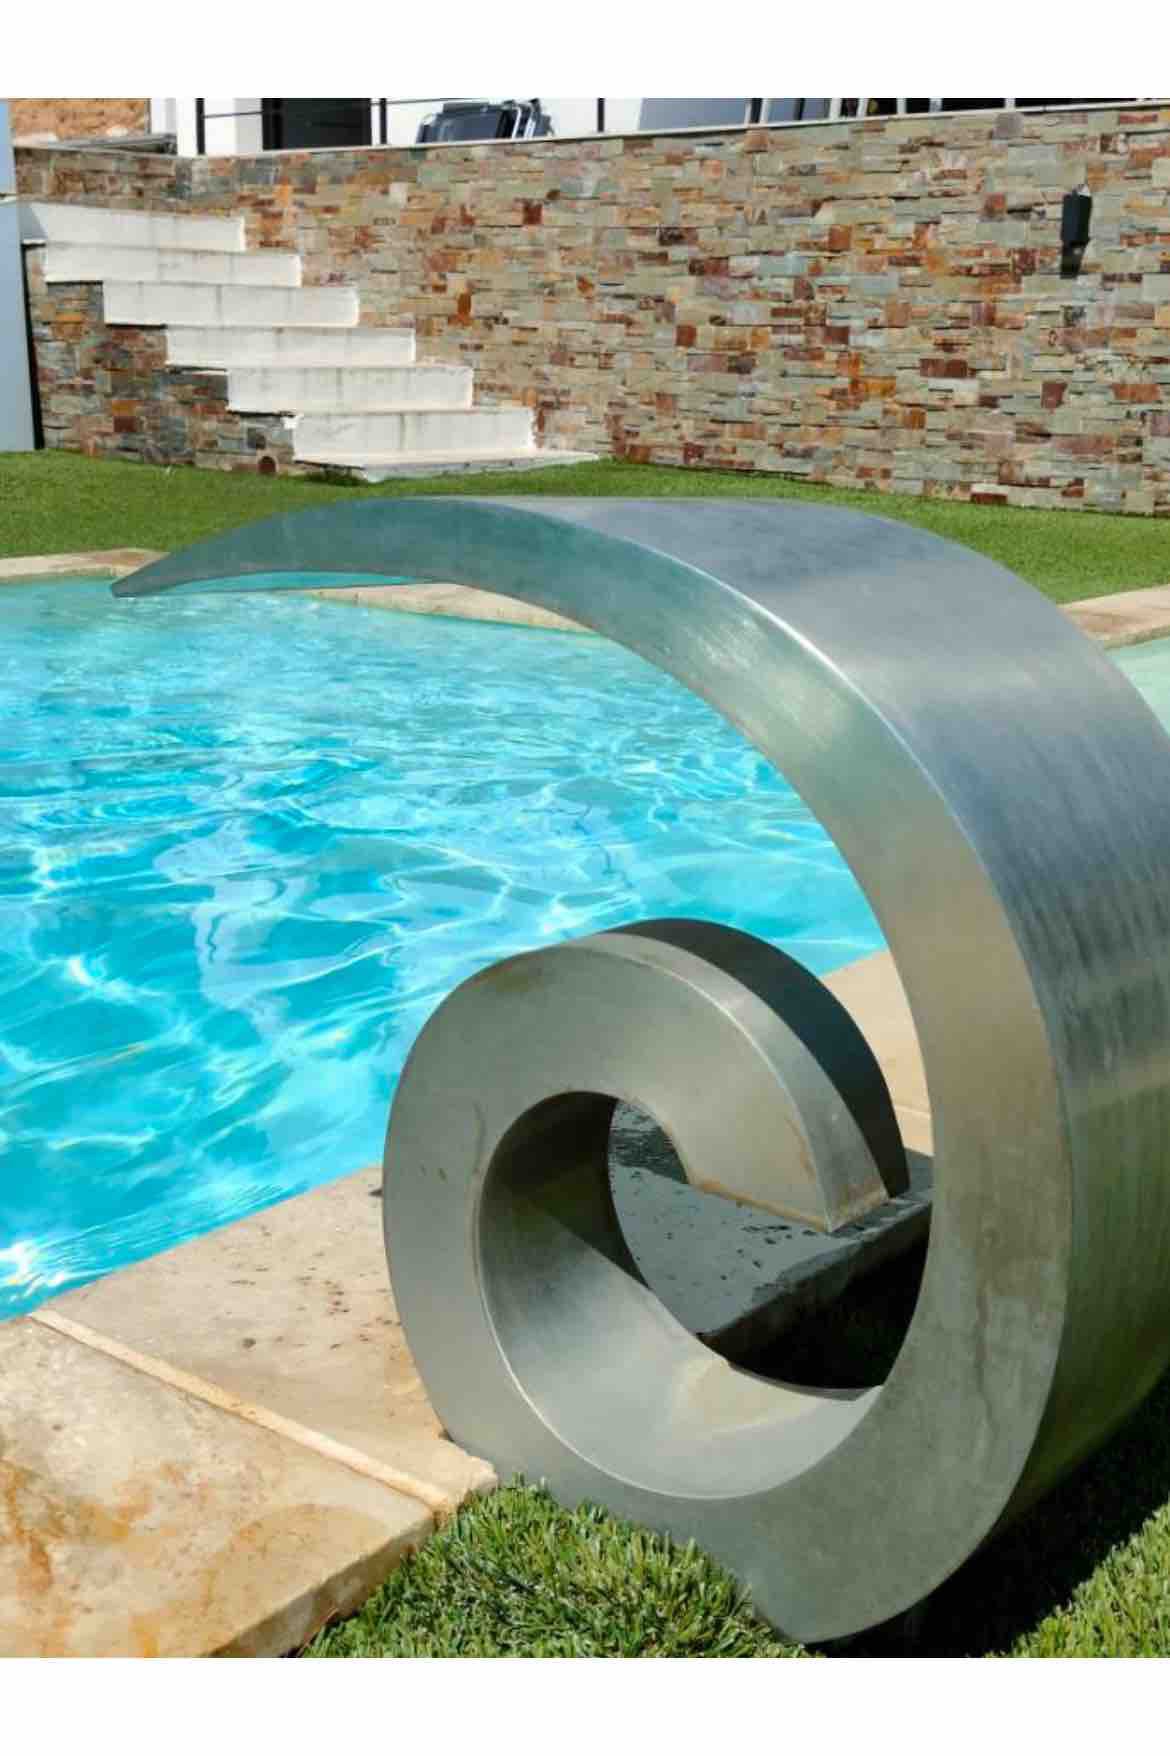 Villa prestations hauts de gamme piscine chauffée